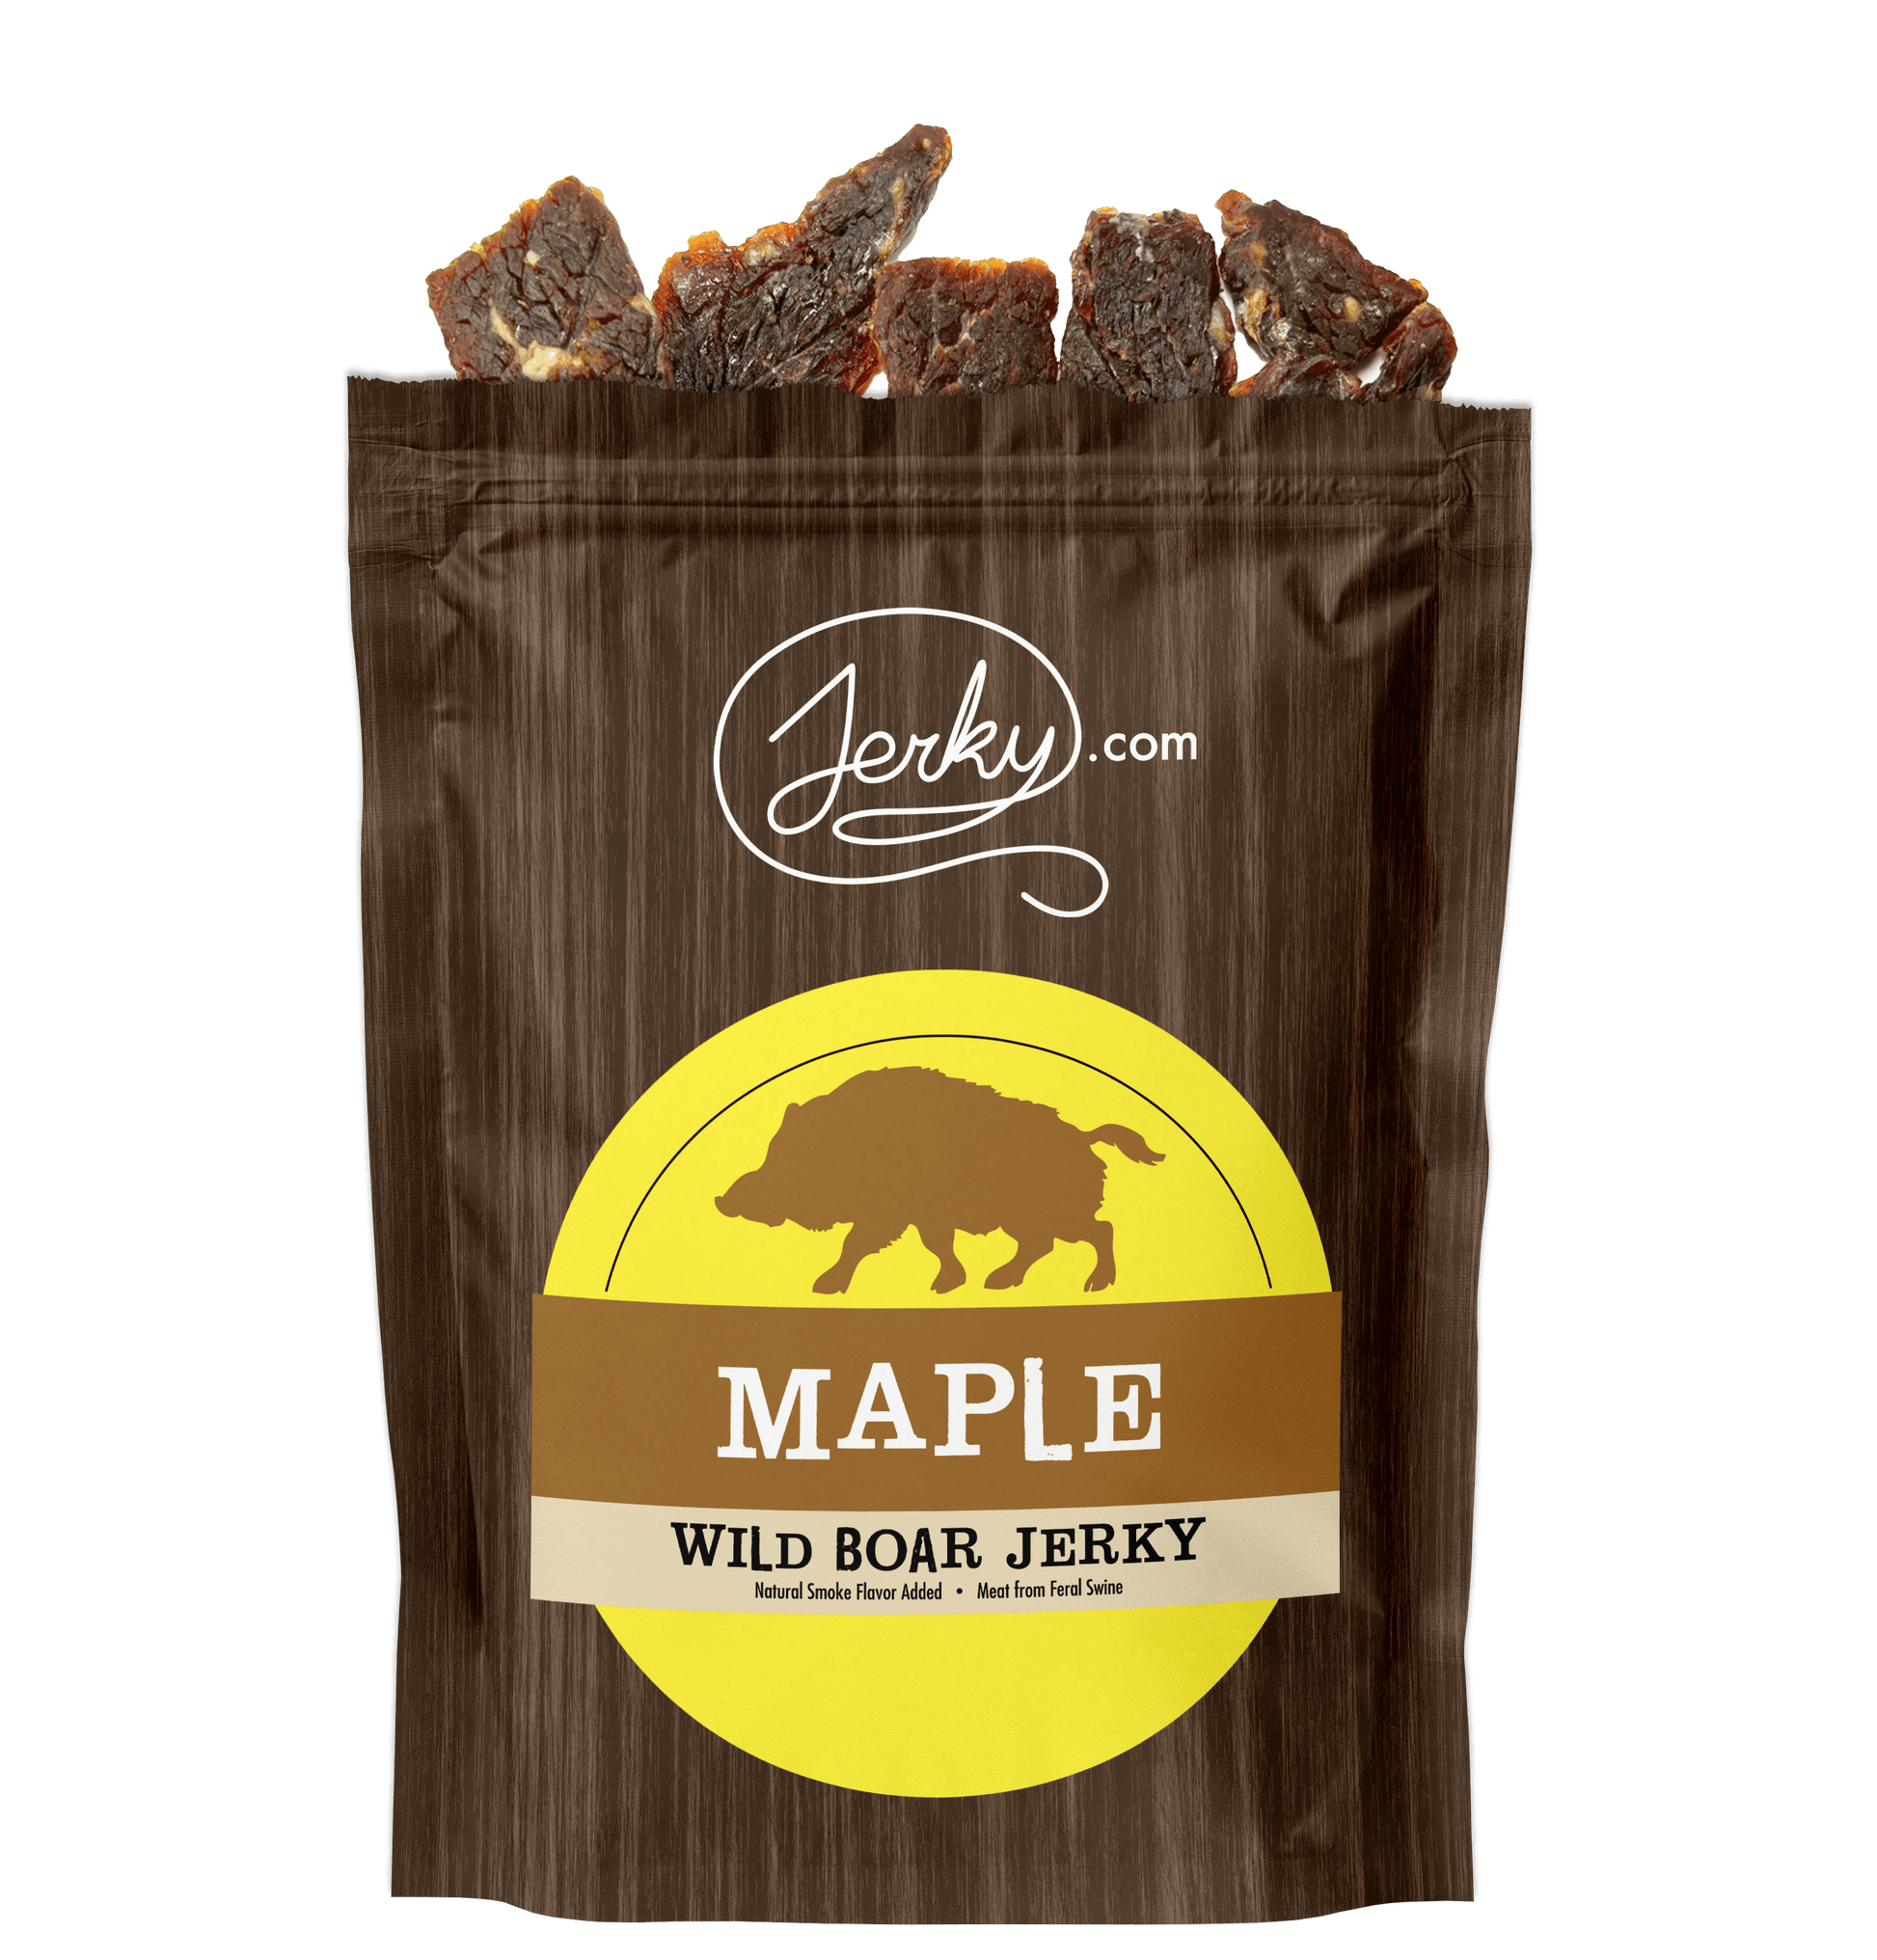 All-Natural Wild Boar Jerky - Maple by Jerky.com